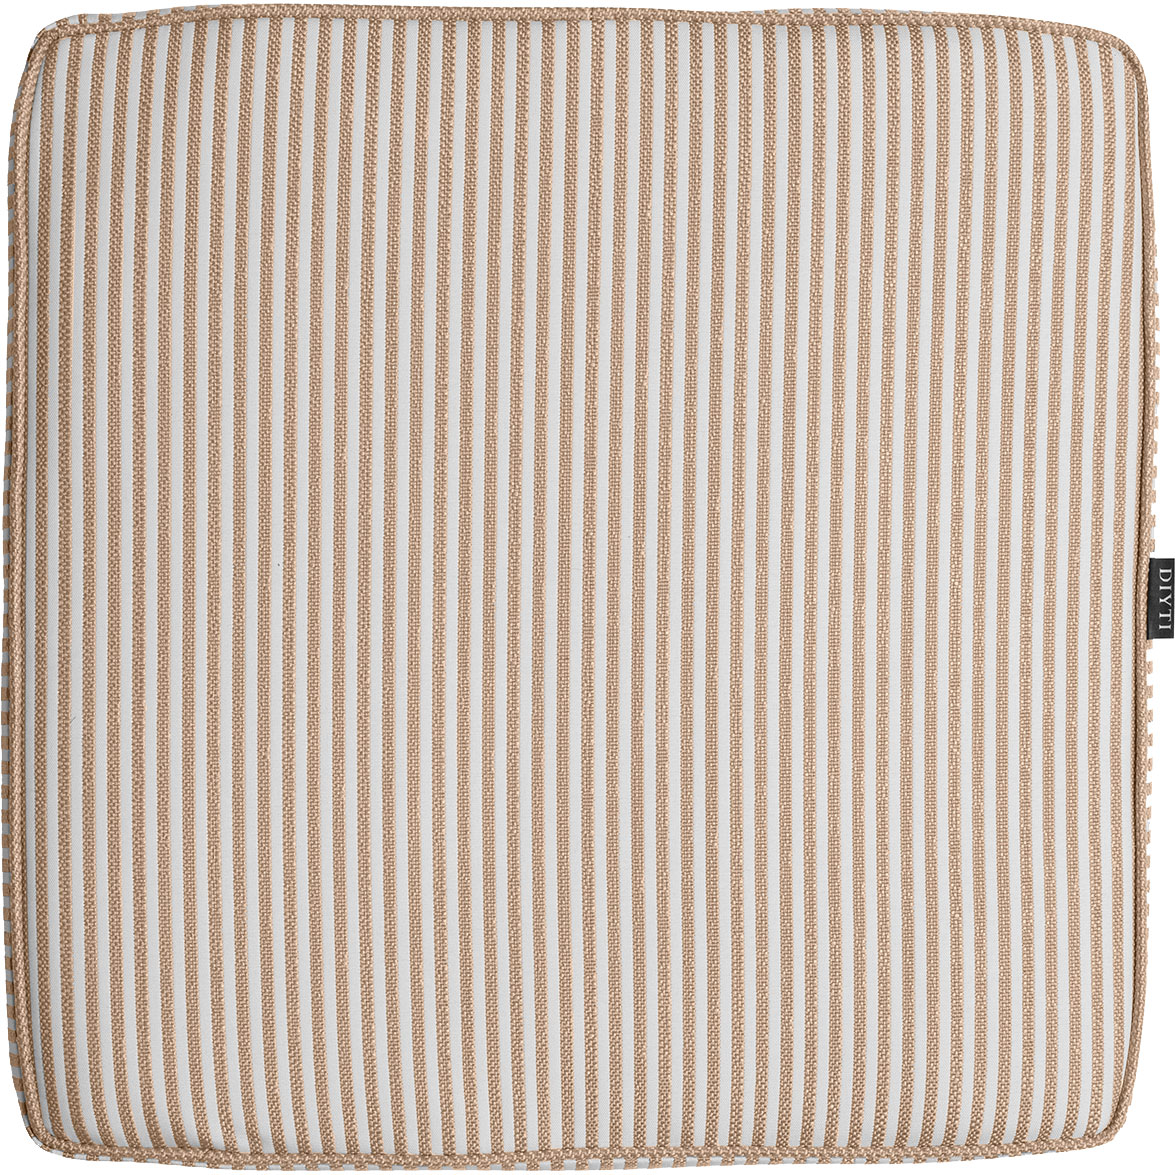 Narrow Stripe Cushion 45x45 cm, Beige